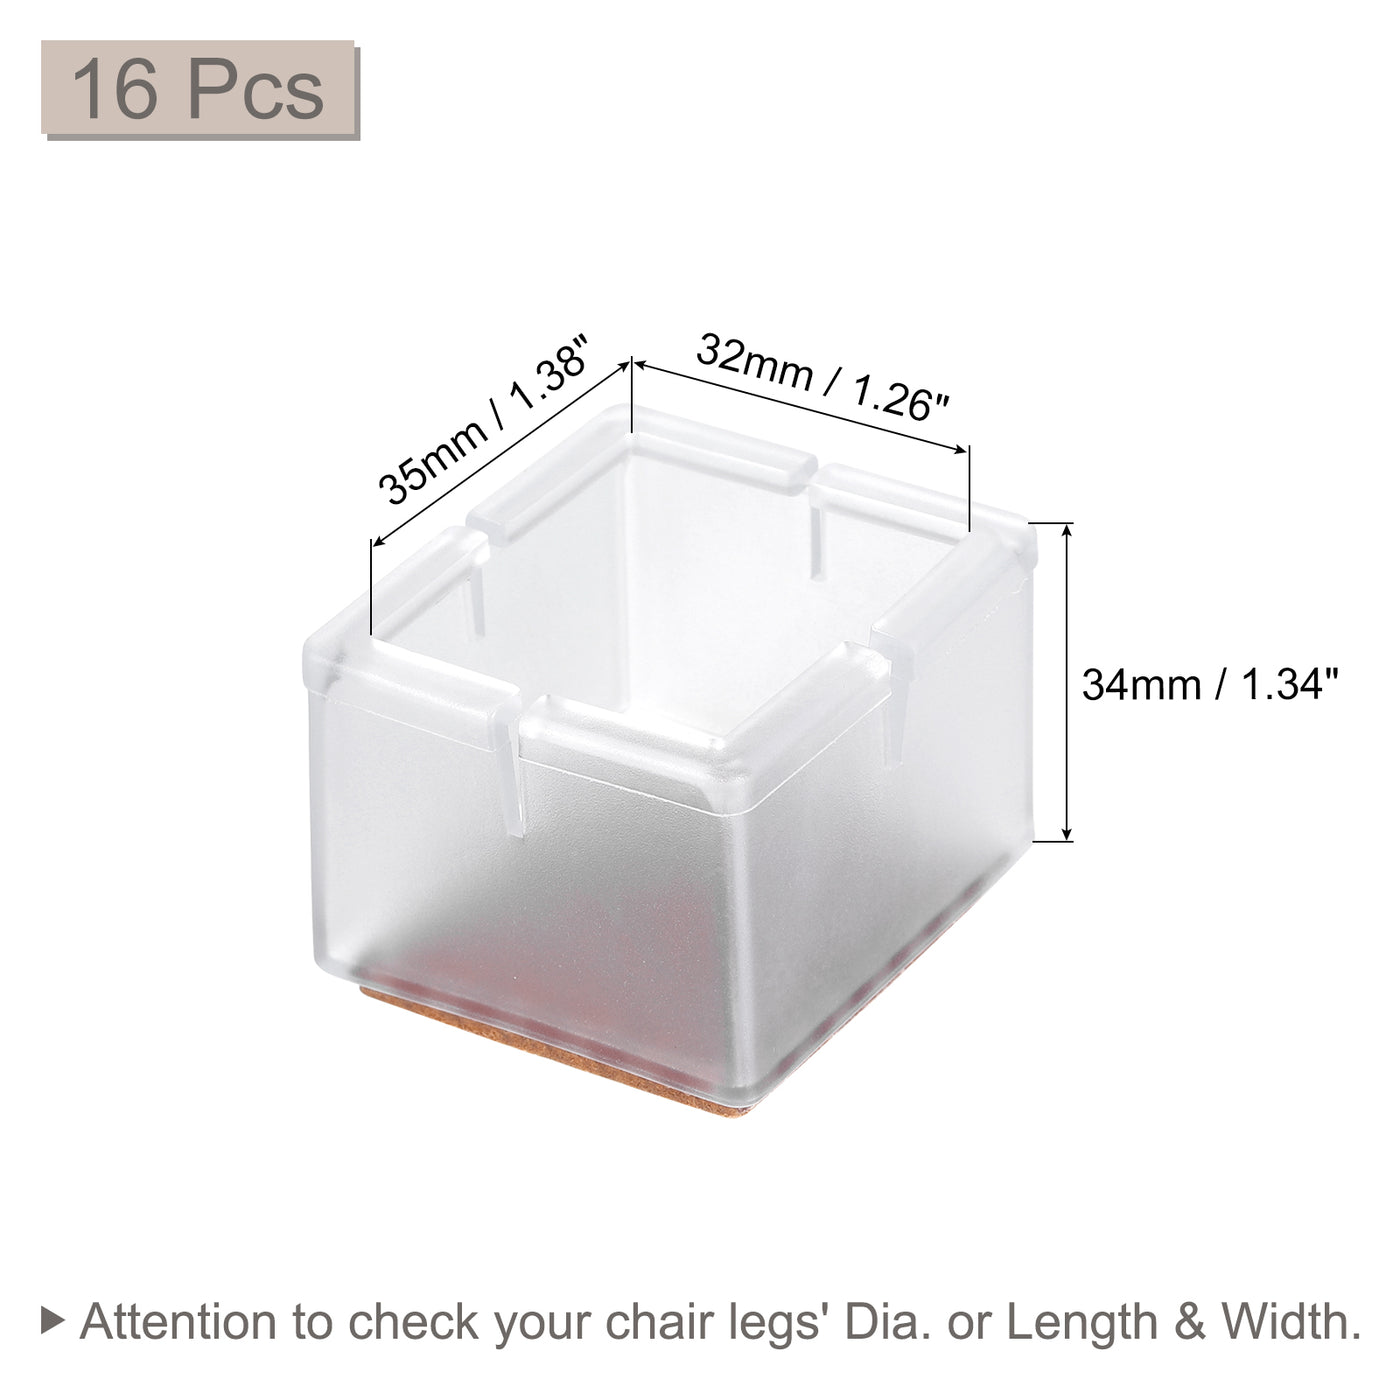 uxcell Uxcell Chair Leg Floor Protectors, 16Pcs 35mm(1.38") Rectangle PVC & Felt Chair Leg Cover Caps for Hardwood Floors (Clear White)